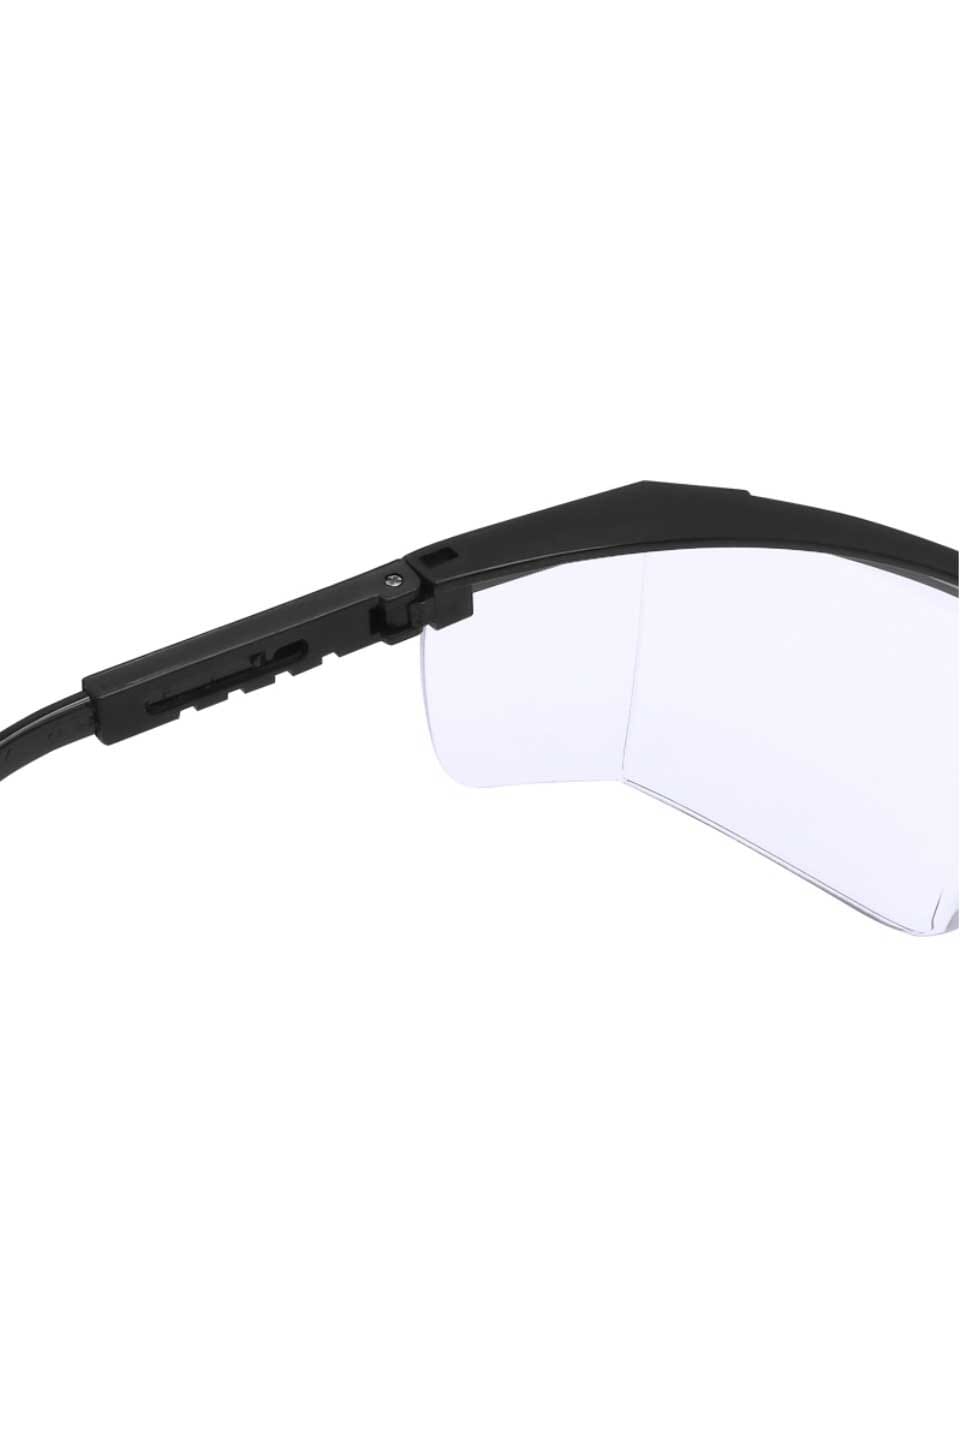 Dingqi Anti UV Eye Safety Goggles Eyewear SRL 